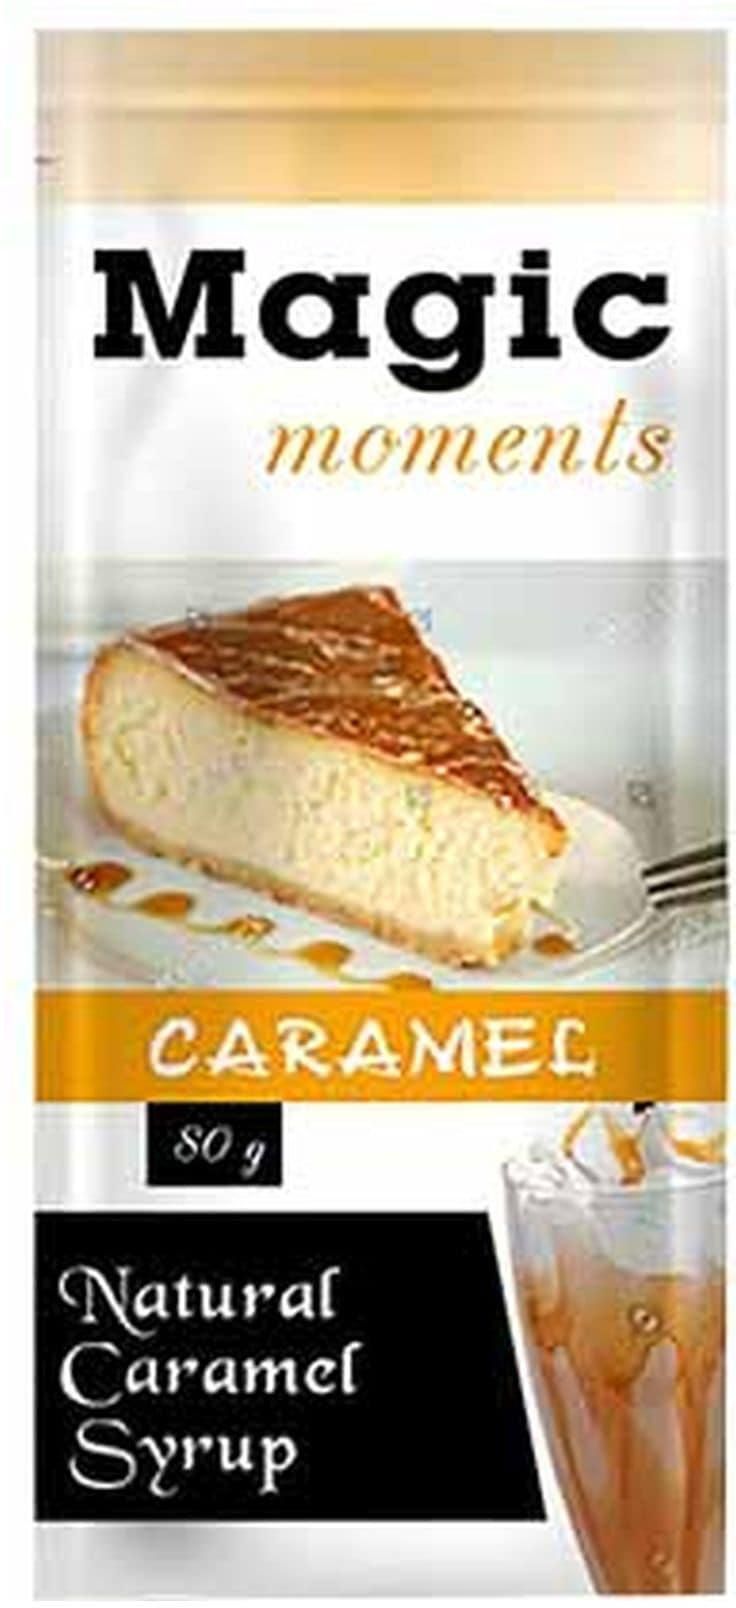 Magic Moments Caramel Syrup - 25 Gram